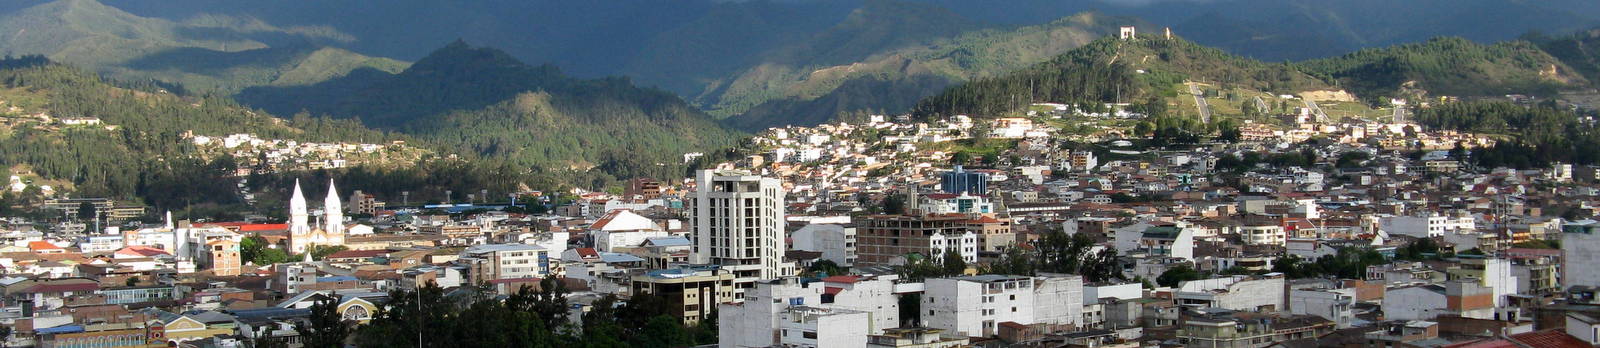 Loja Ecuador